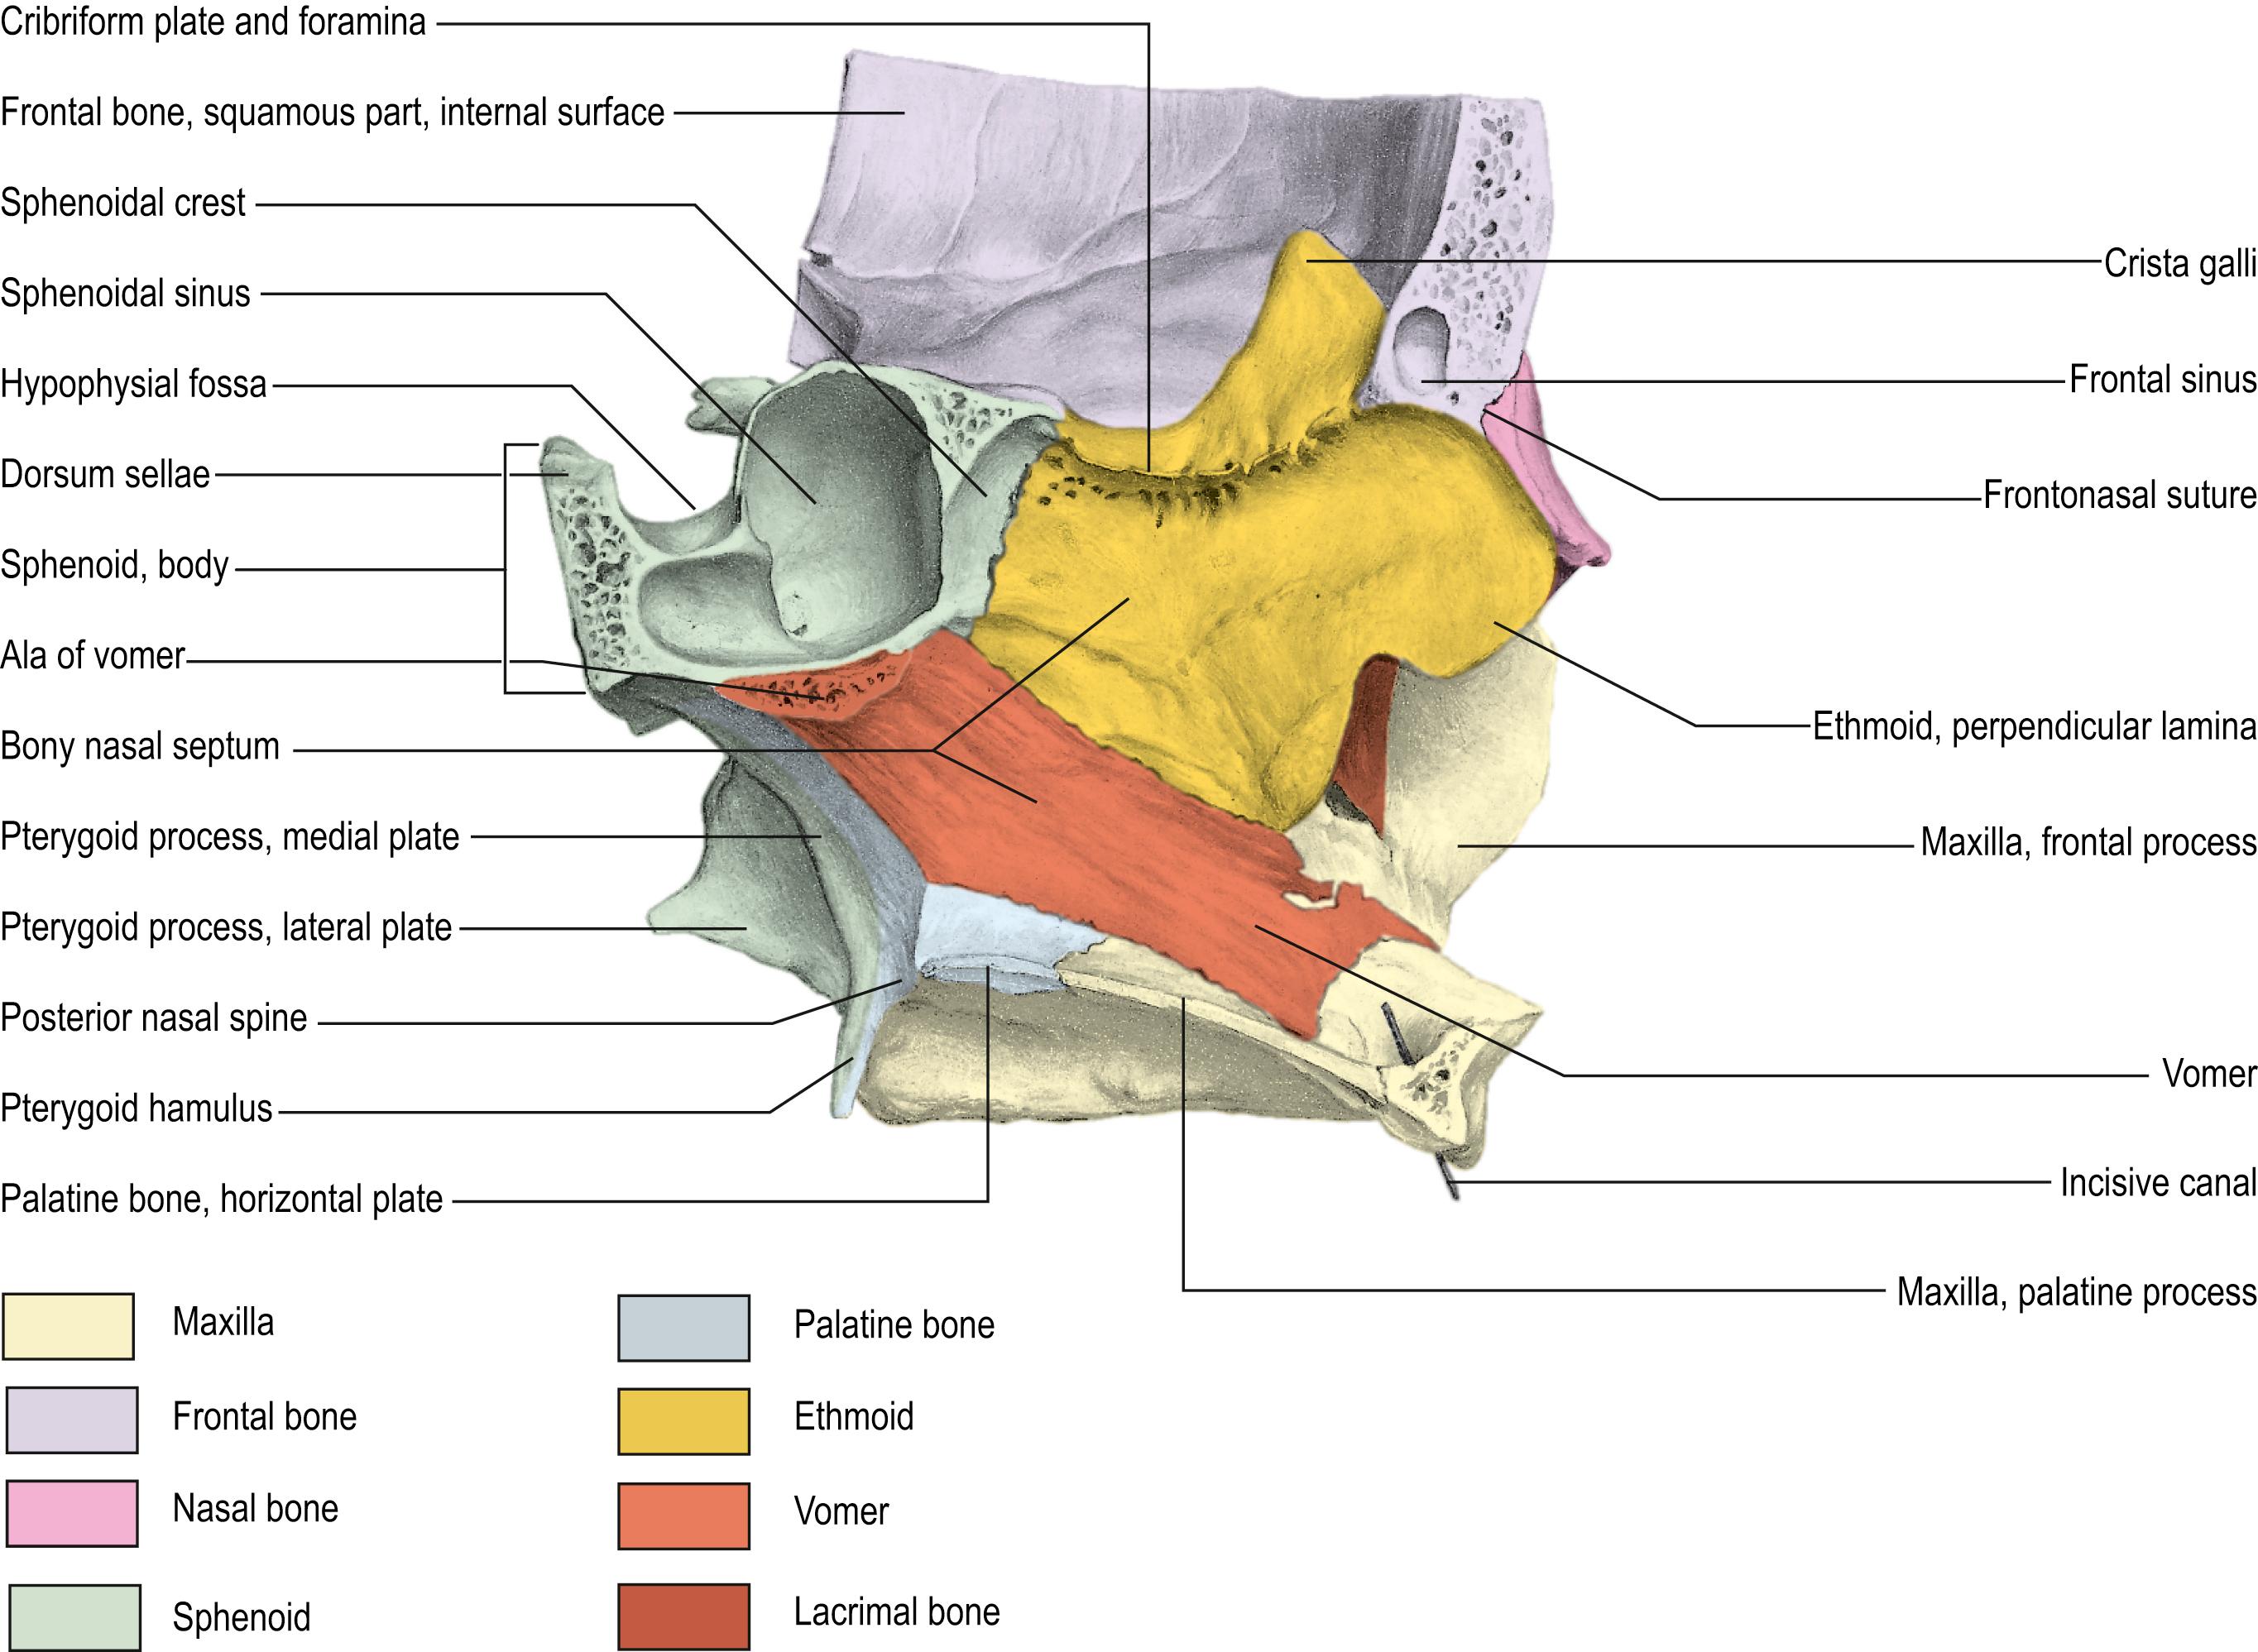 FIGURE 12.1, Sagittal view of the bony nasal septum.